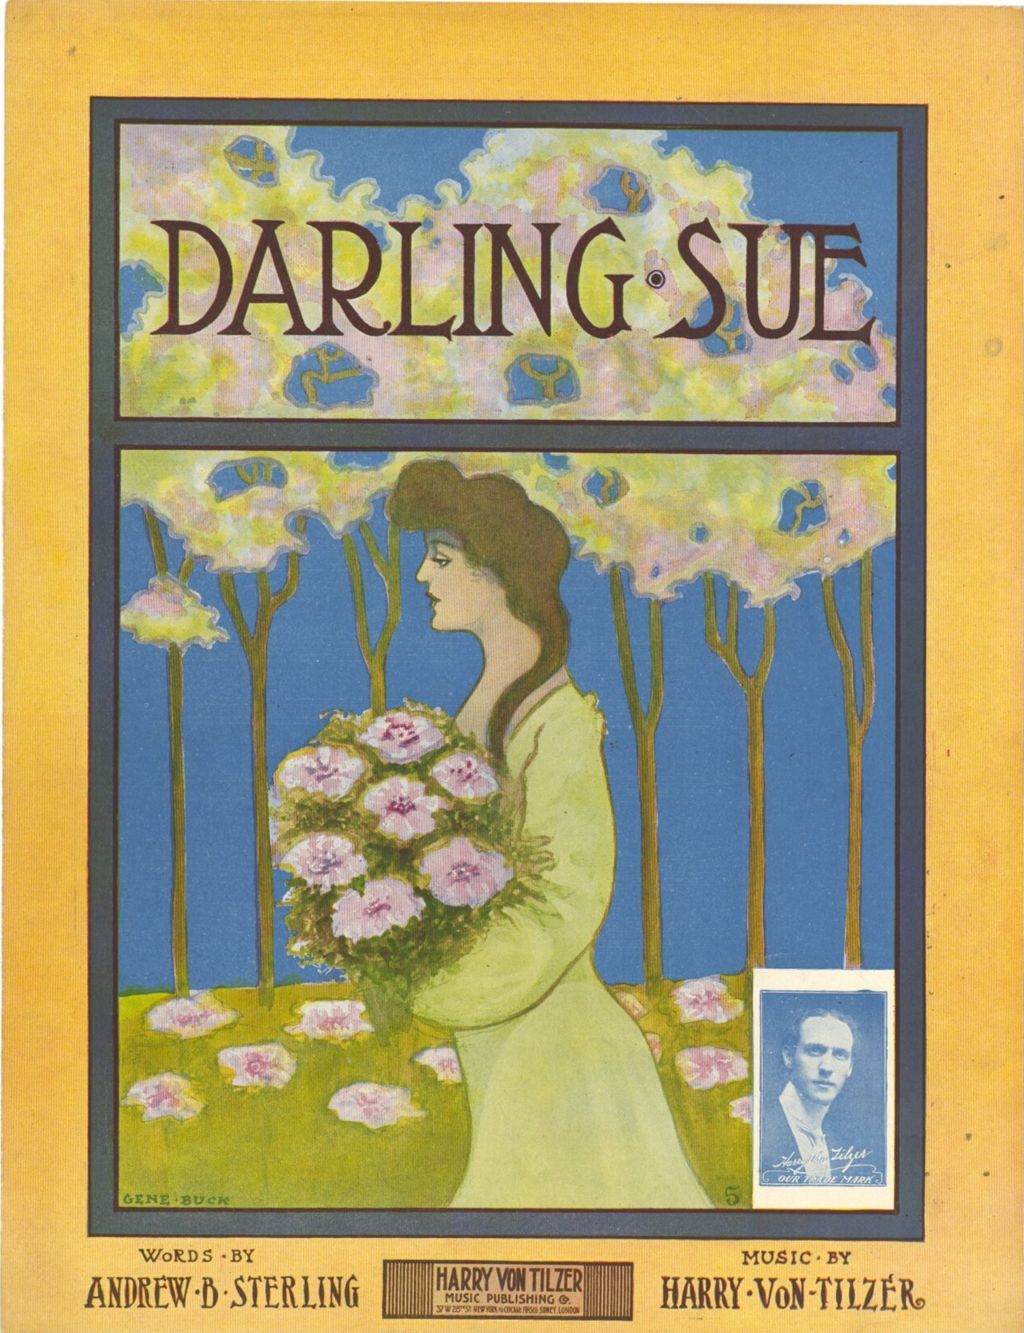 Miniature of Darling Sue